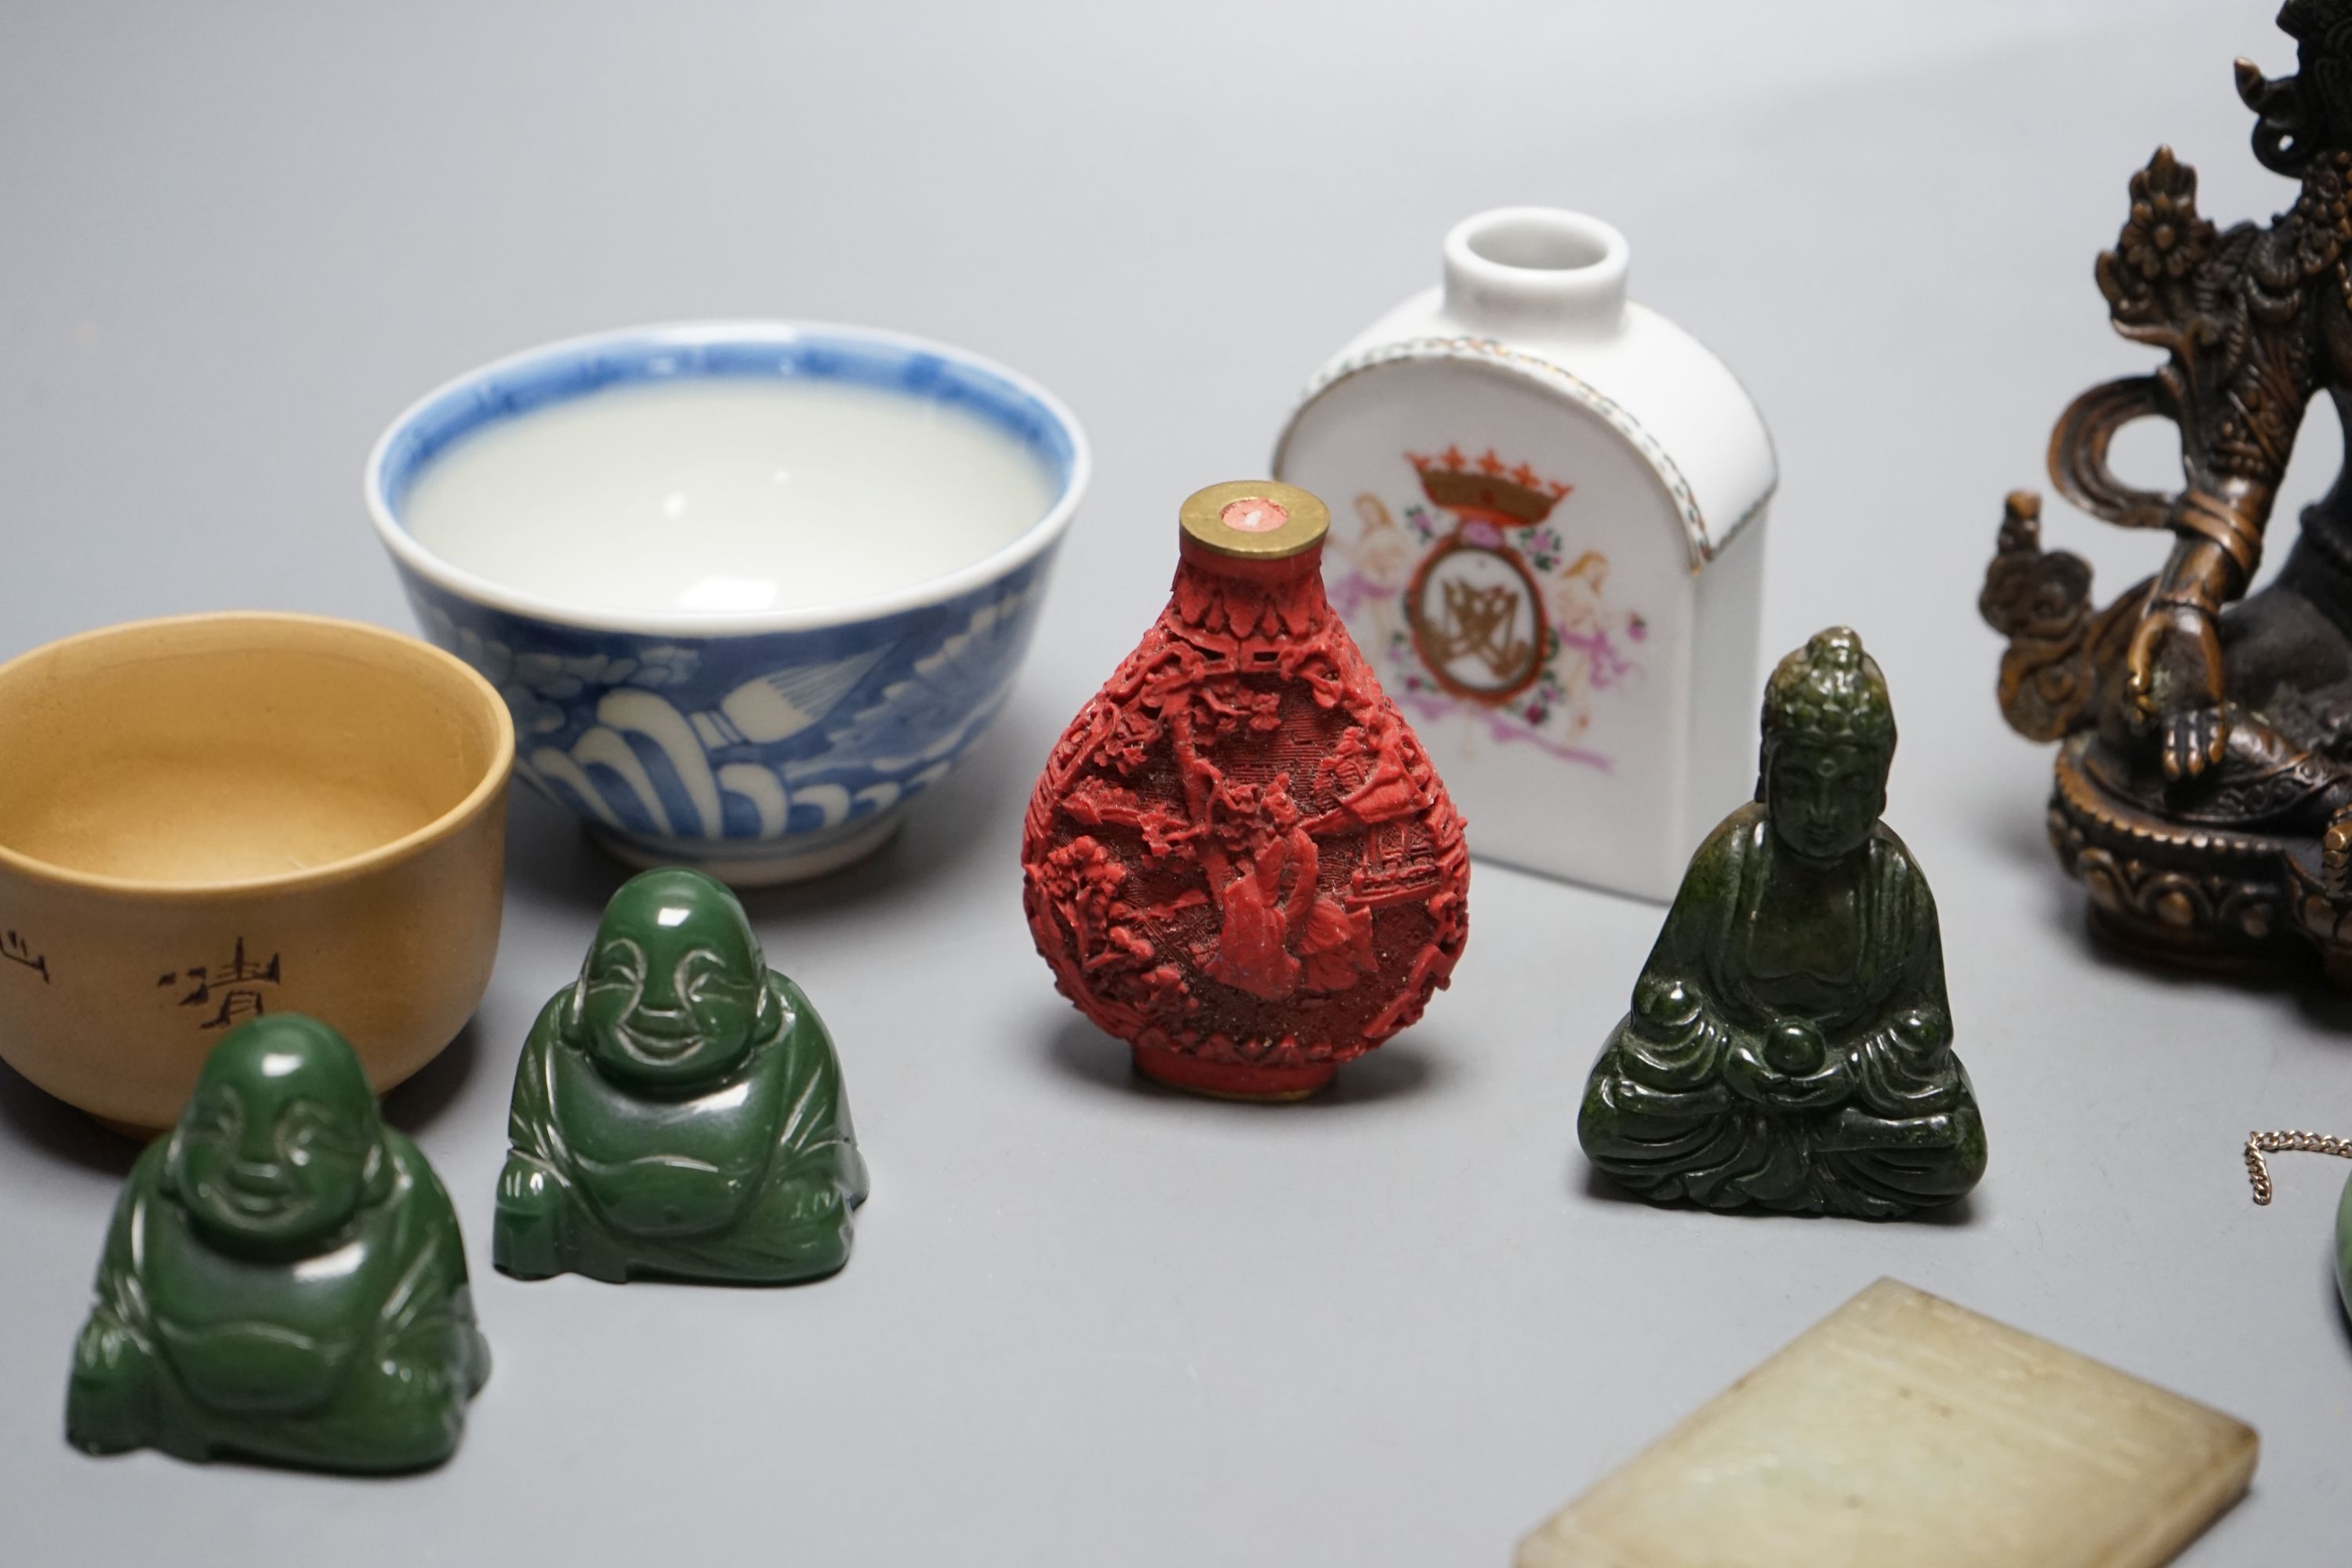 Assorted Chinese items including bronze Tibetan buddha, jades etc, Buddha 13 cms wide.